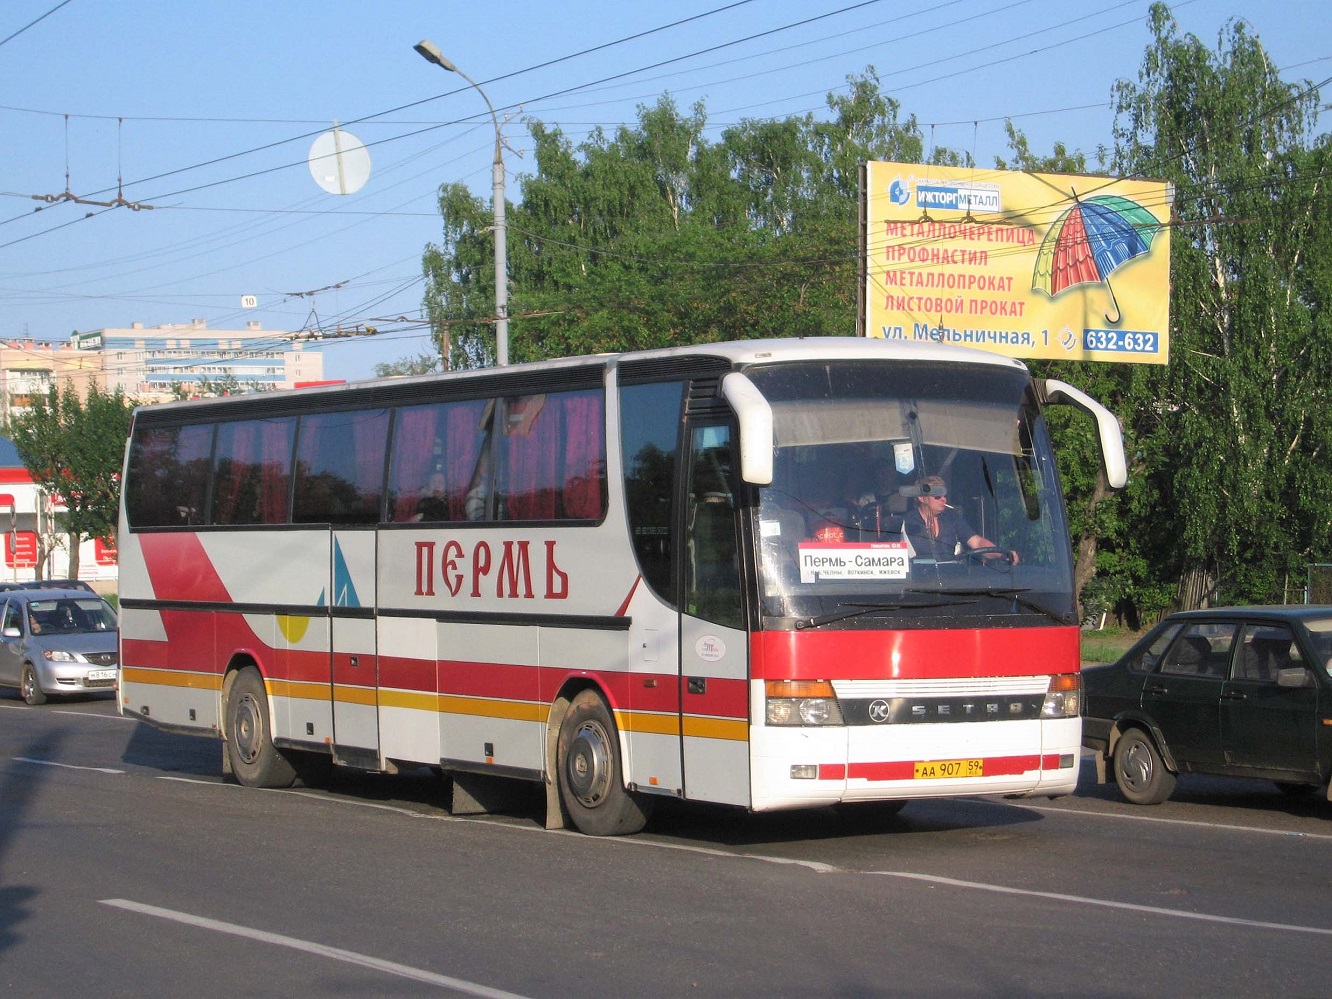 Perm, Setra S315HD č. АА 907 59